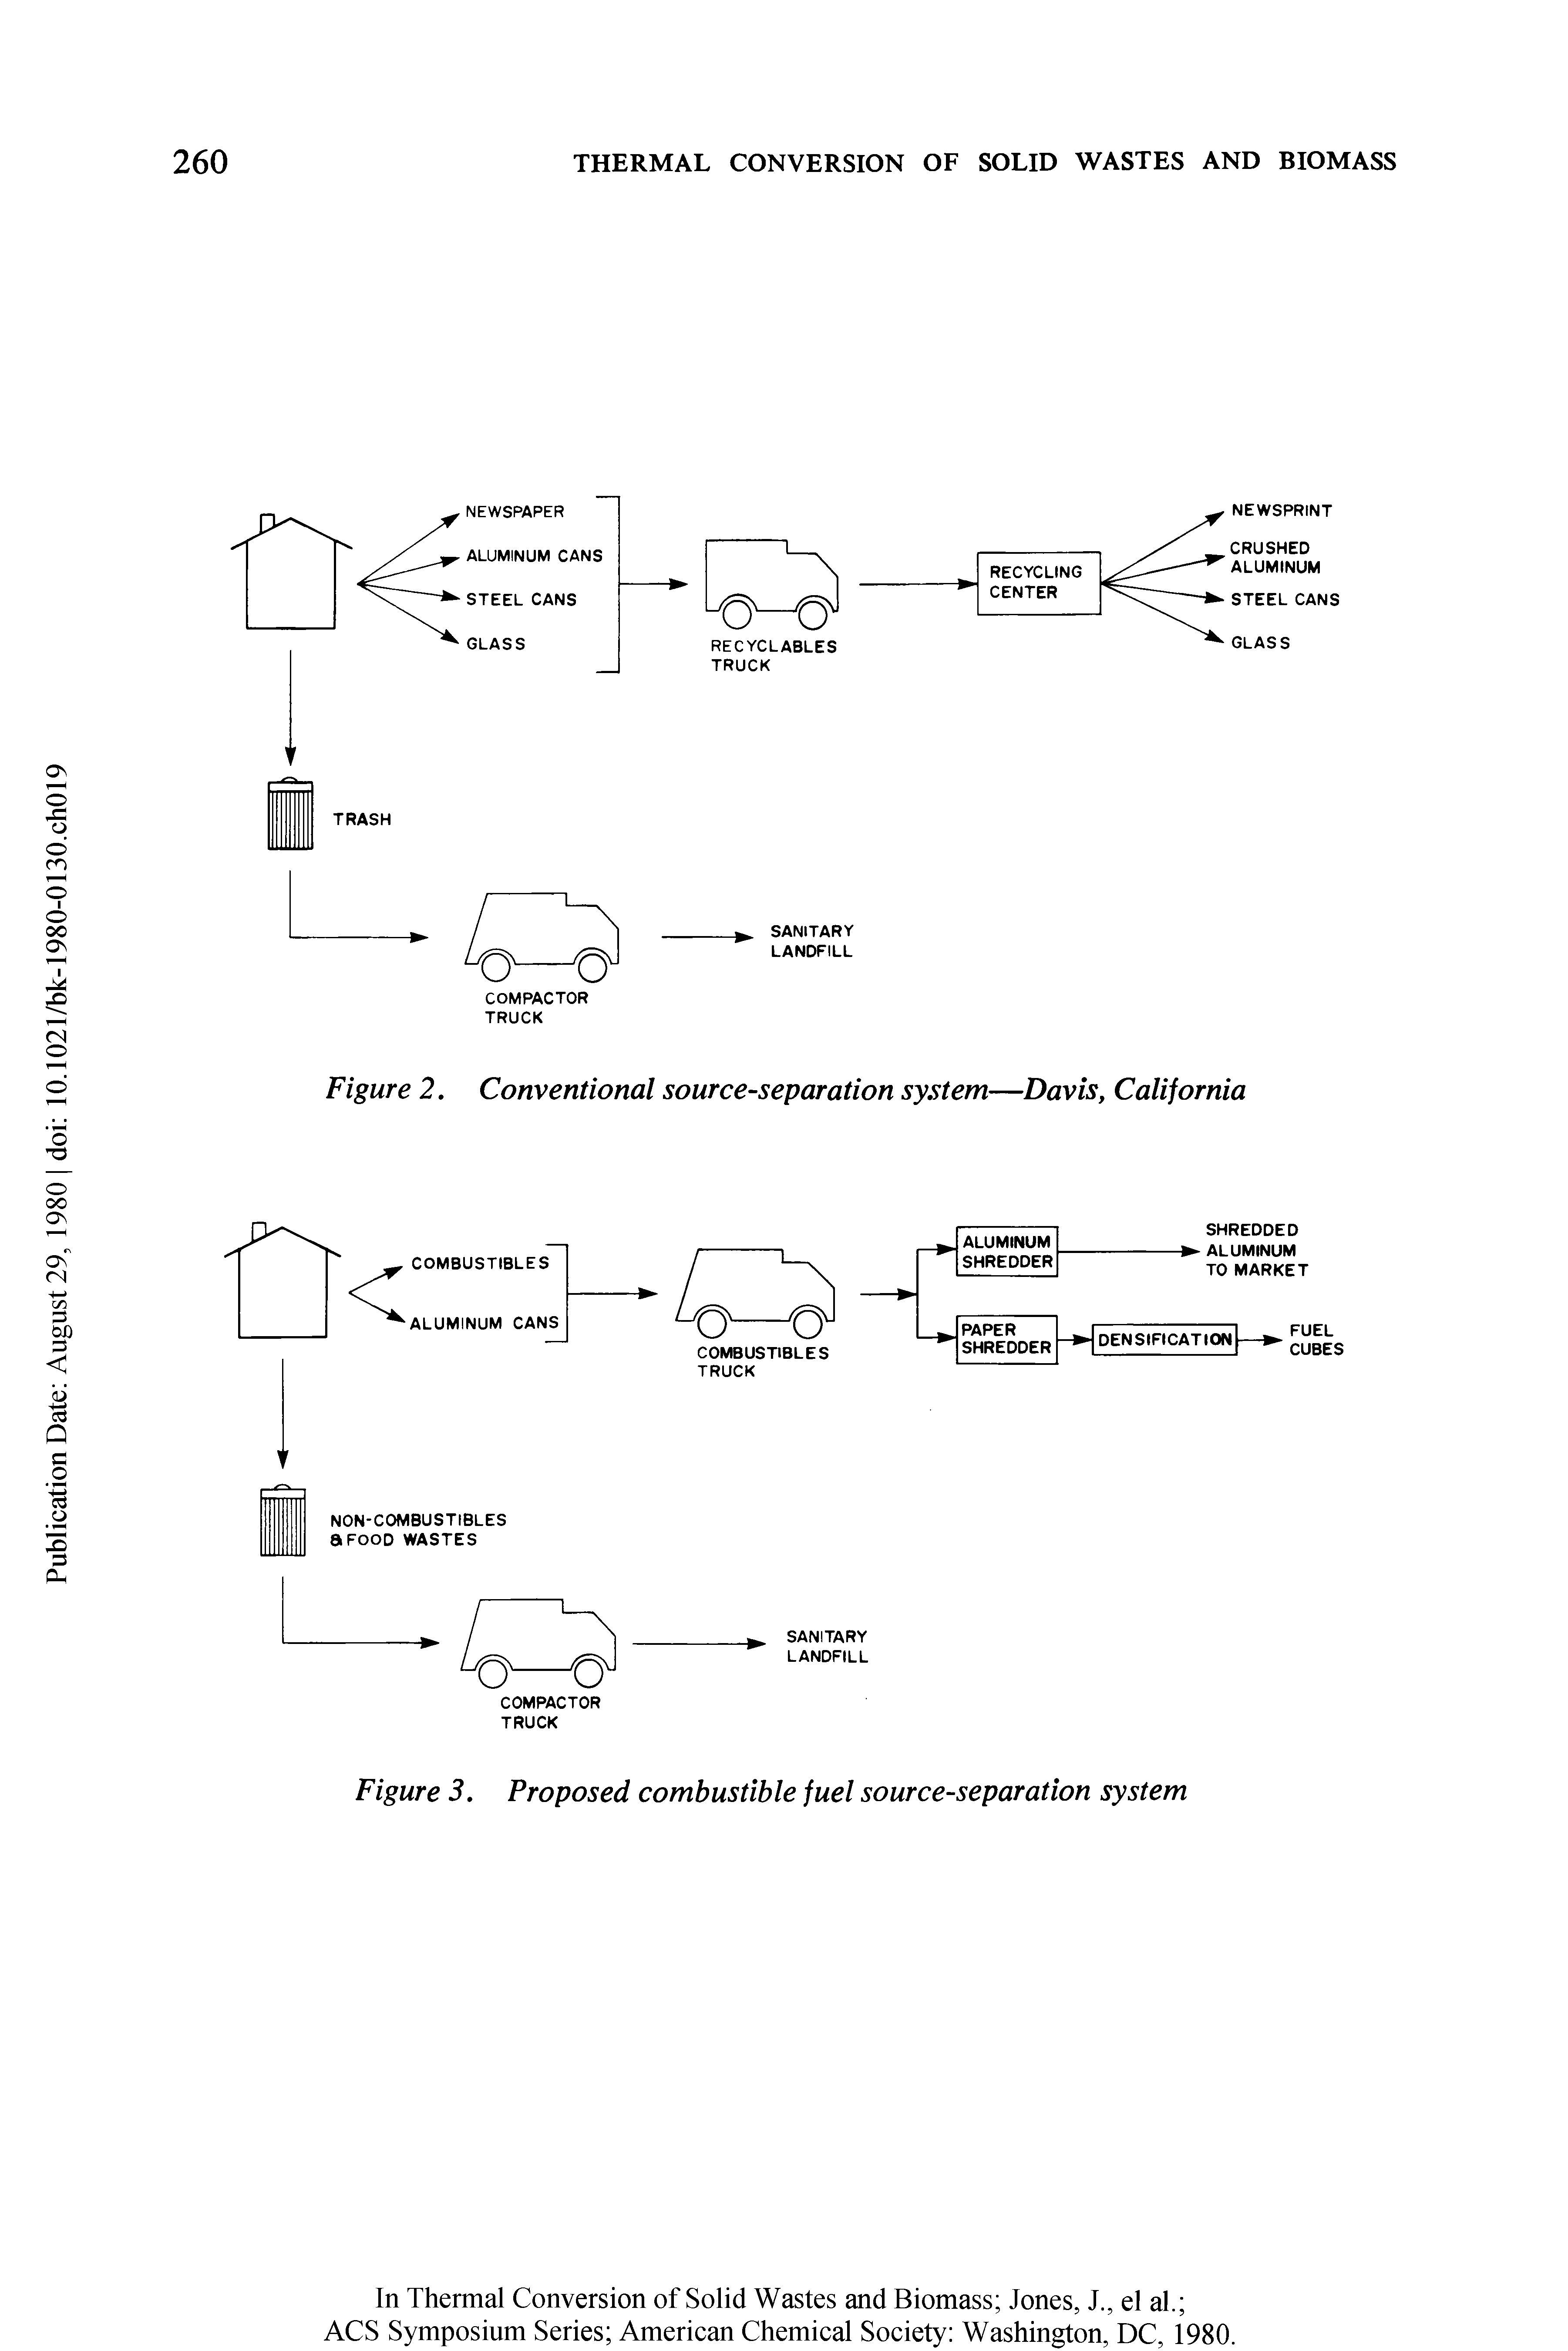 Figure 2. Conventional source-separation system—Davis, California...